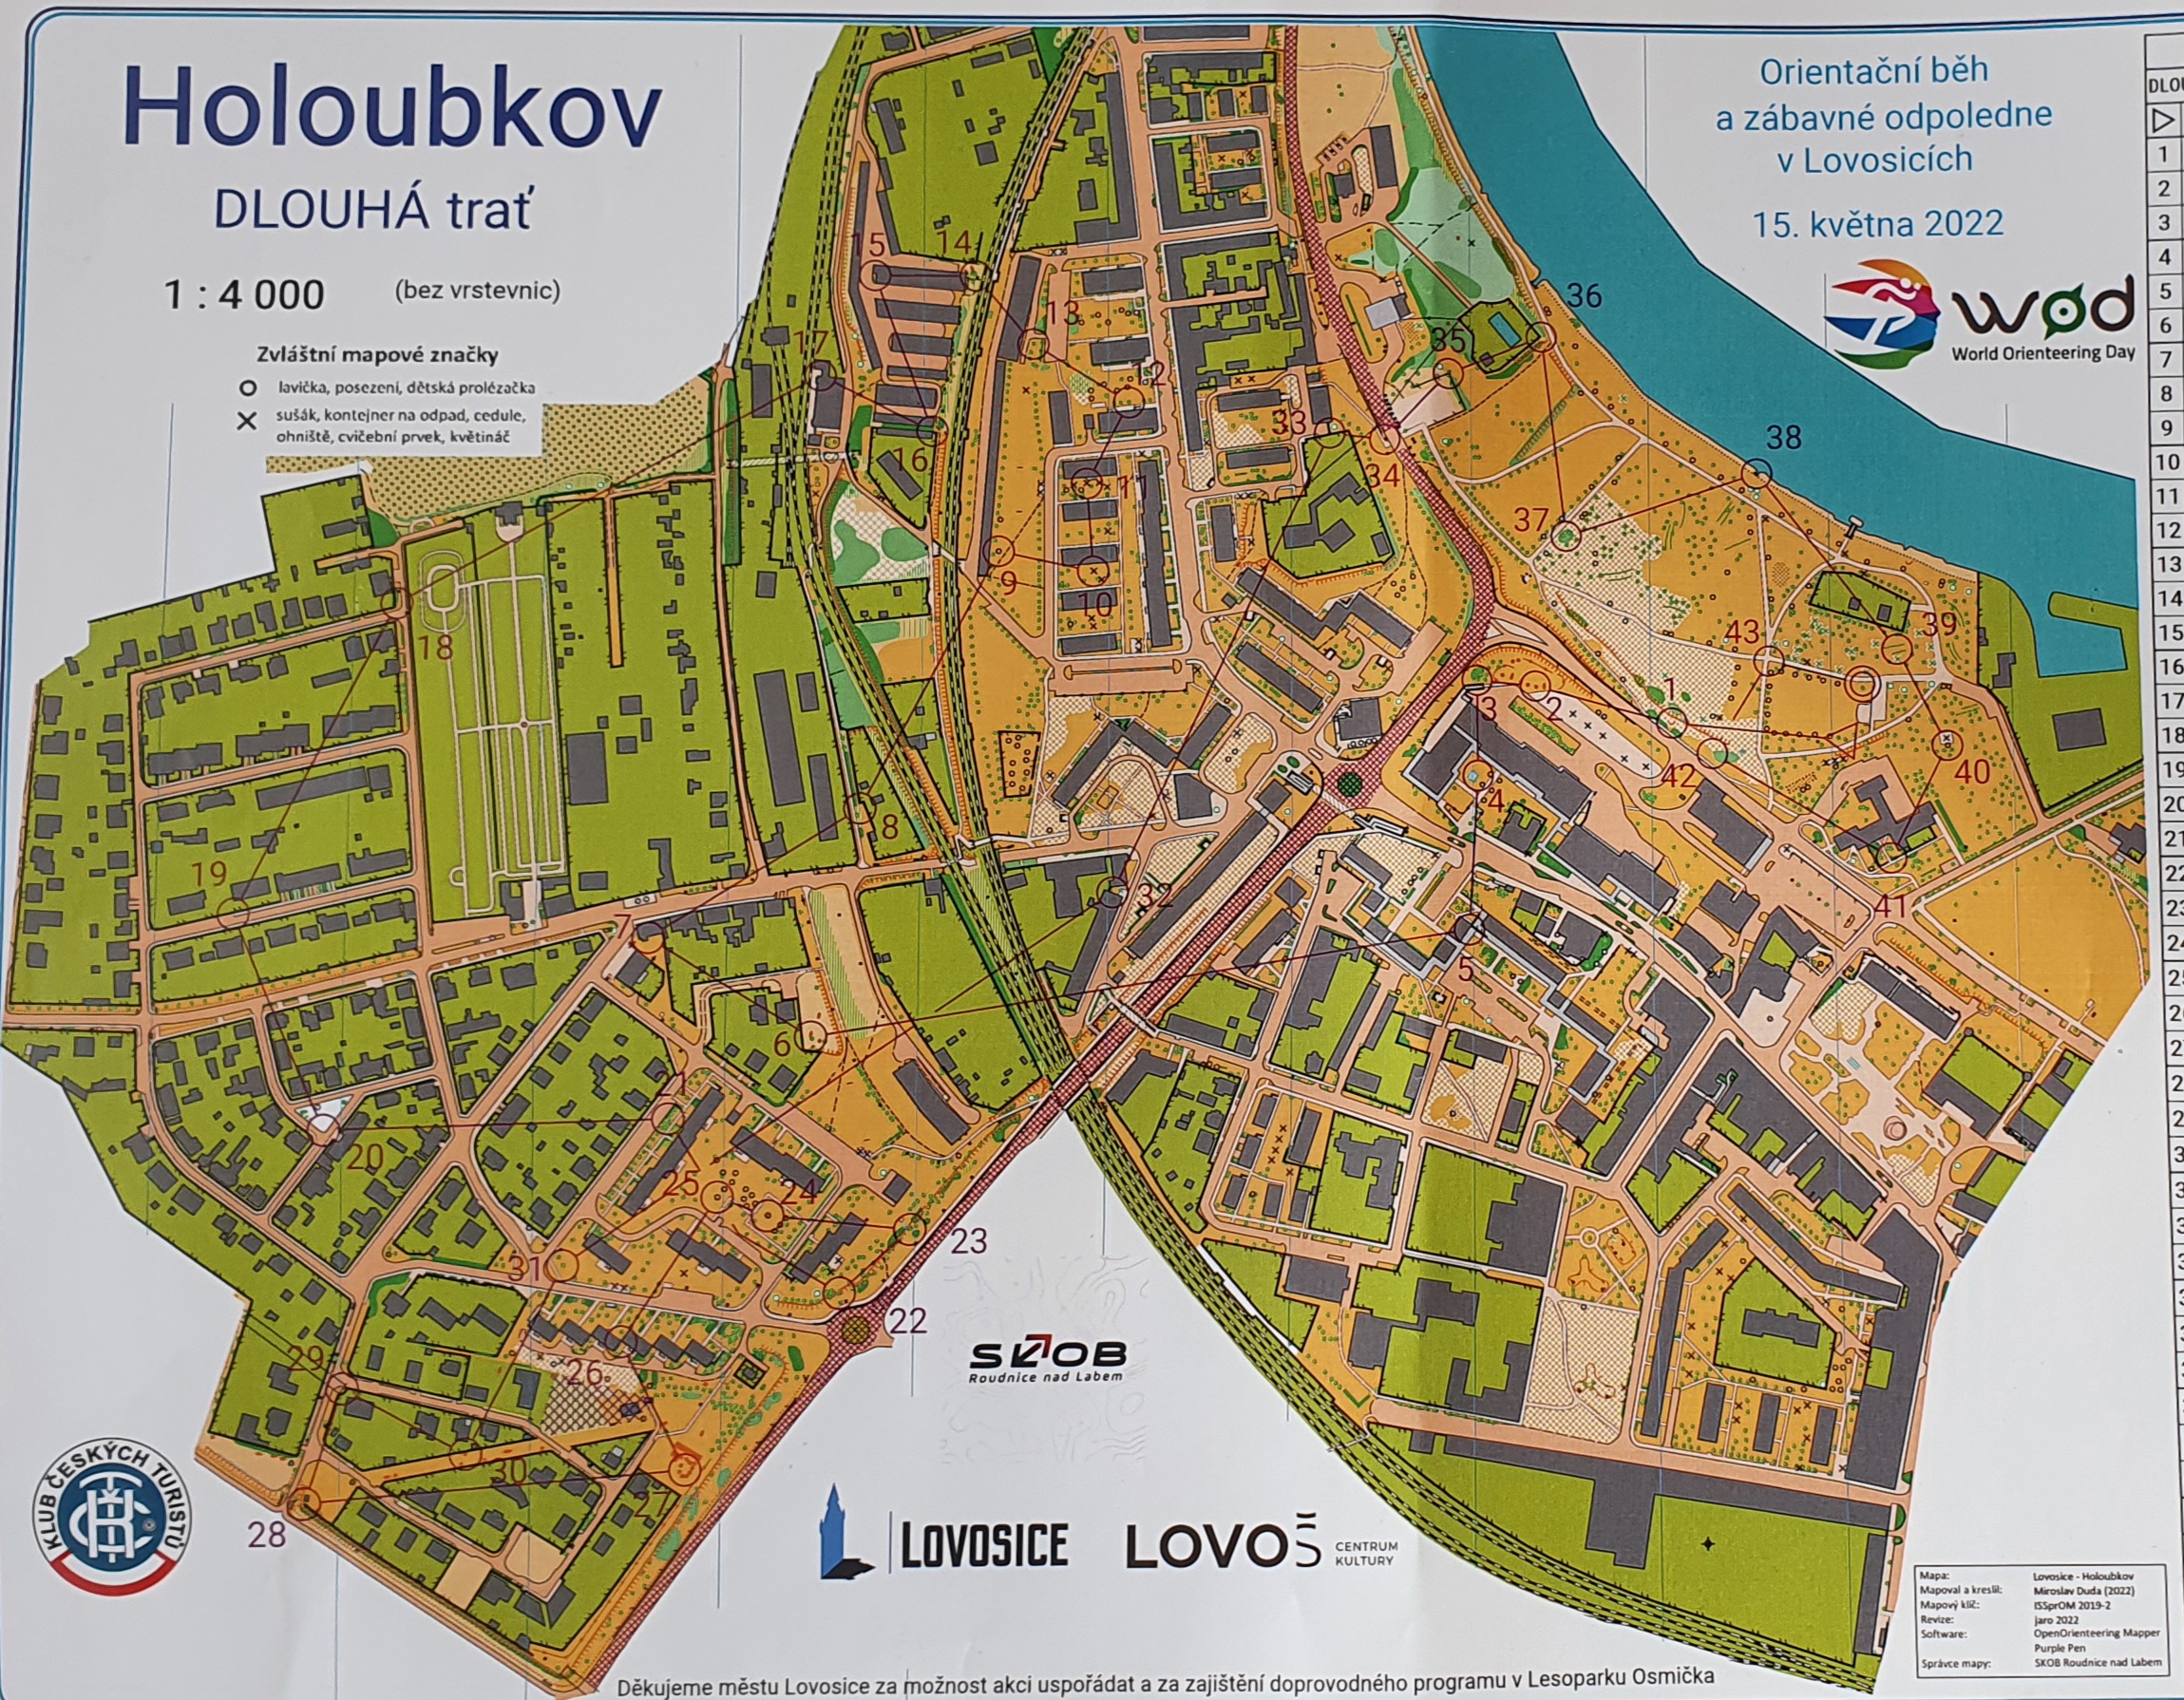 WOD Lovosice (15-05-2022)